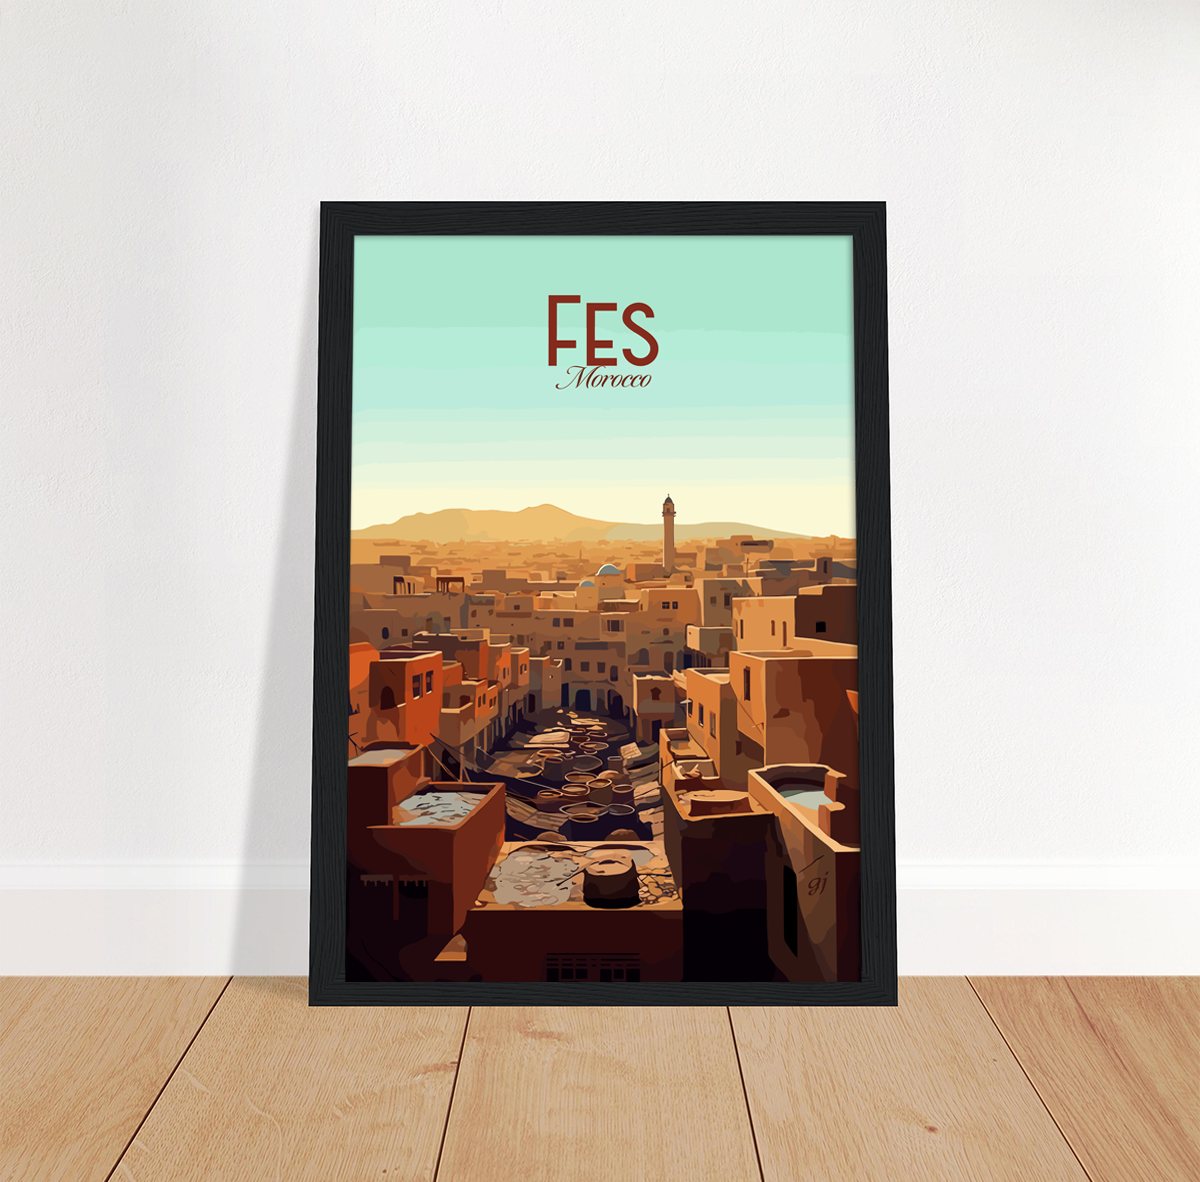 Fes poster by bon voyage design